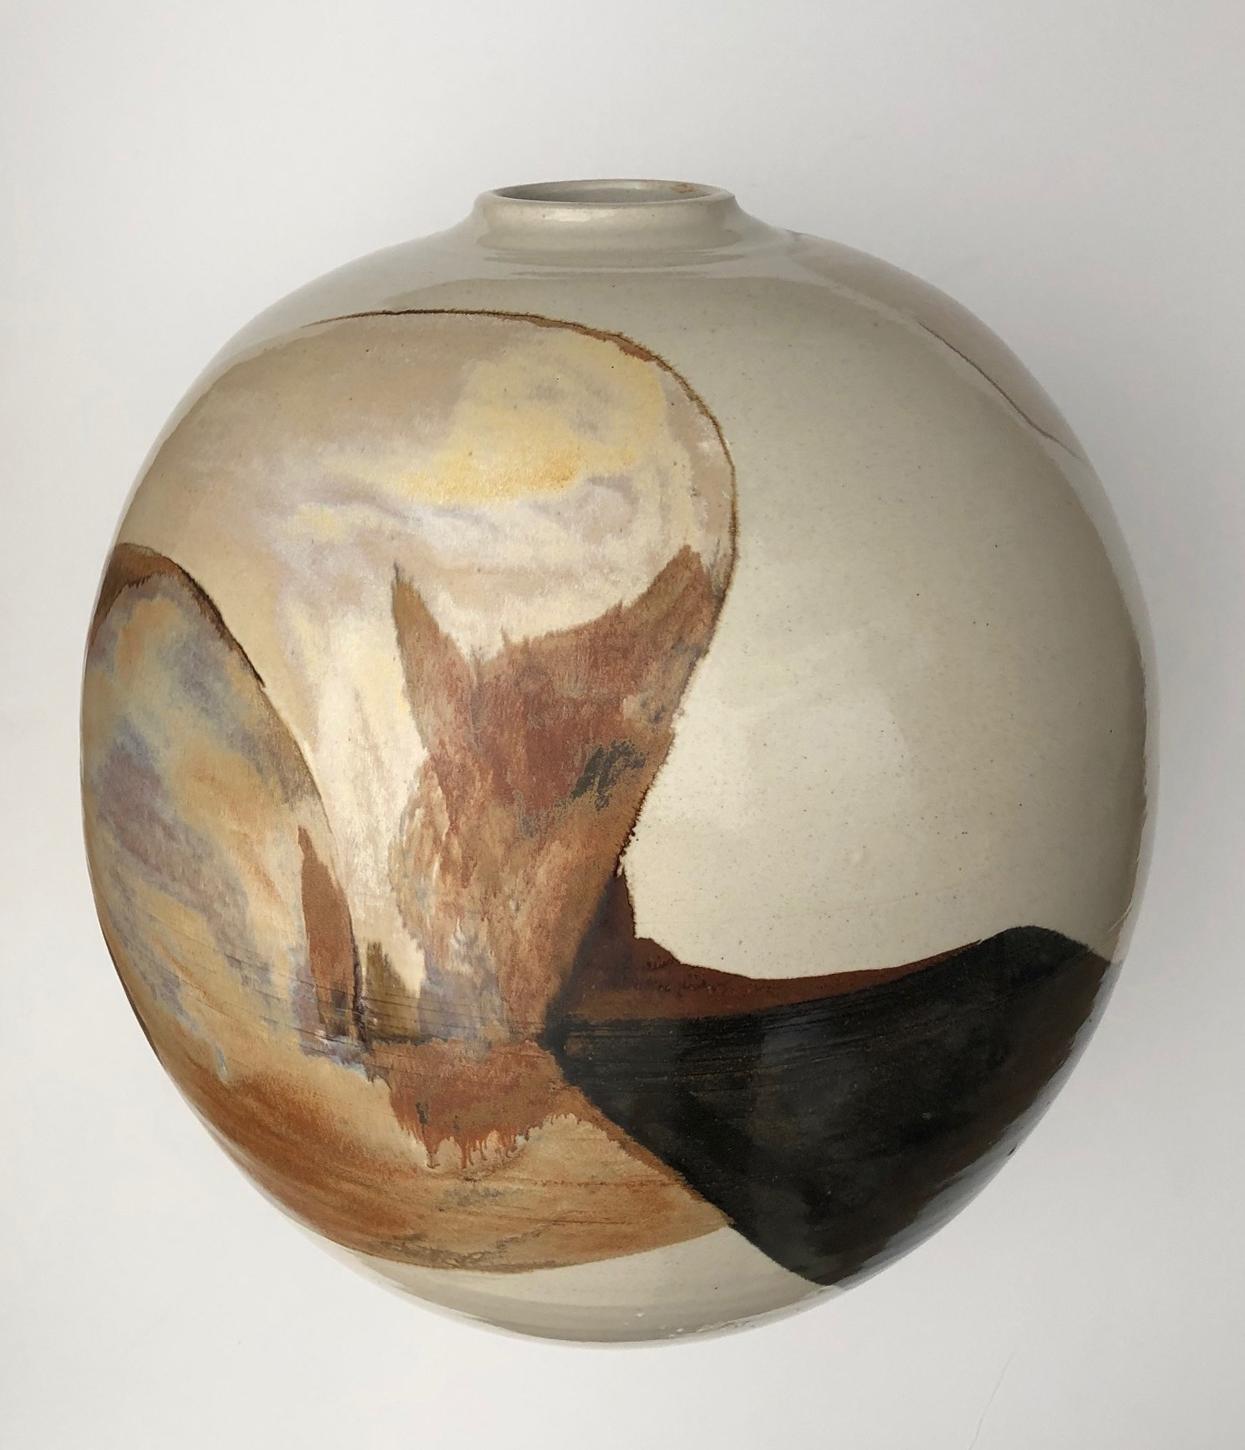 Impressive Glazed Ovoid-Form Pot/Vessel, Signed by Listed Ceramicist Sasha Makov 2